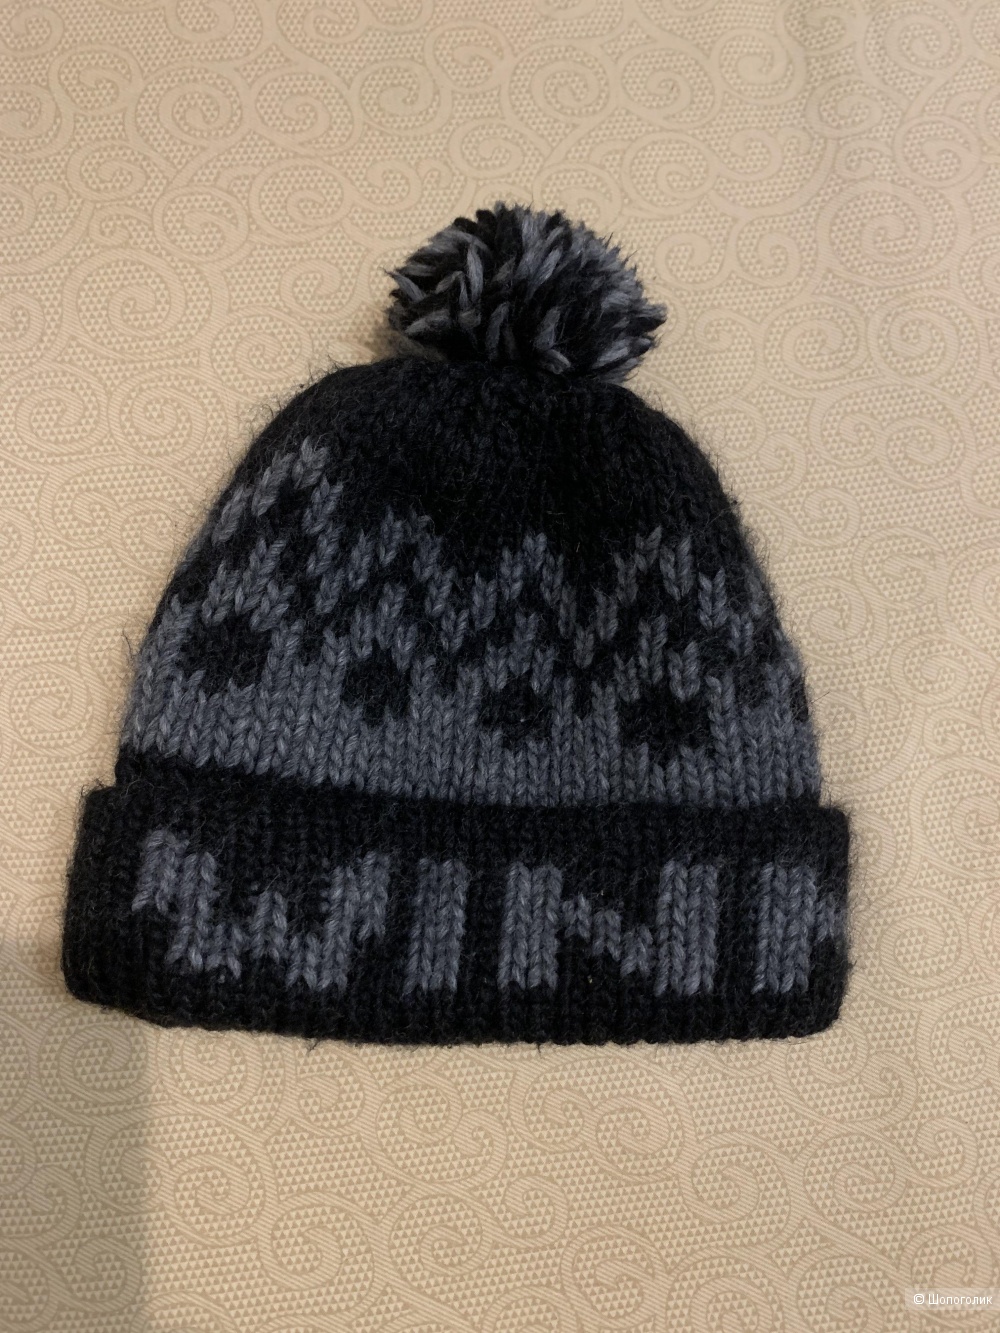 Junior Republic шапка 52-54 размер